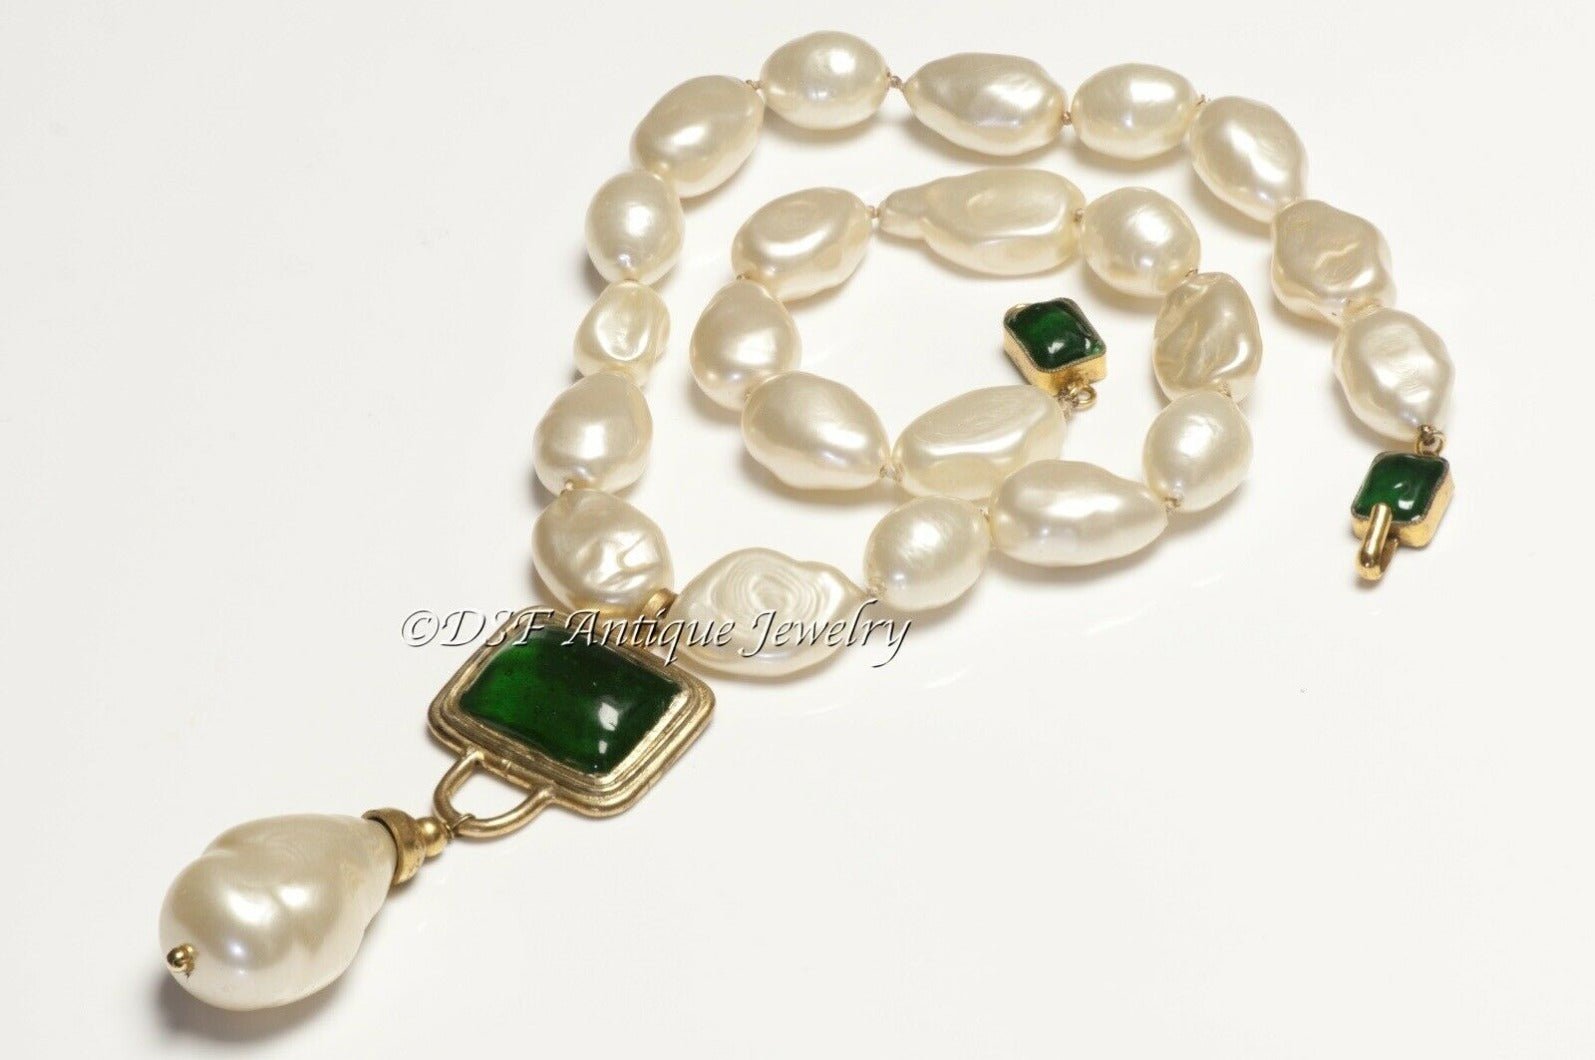 CHANEL Paris 1983 Couture Maison Gripoix Pearl Green Poured Glass Necklace